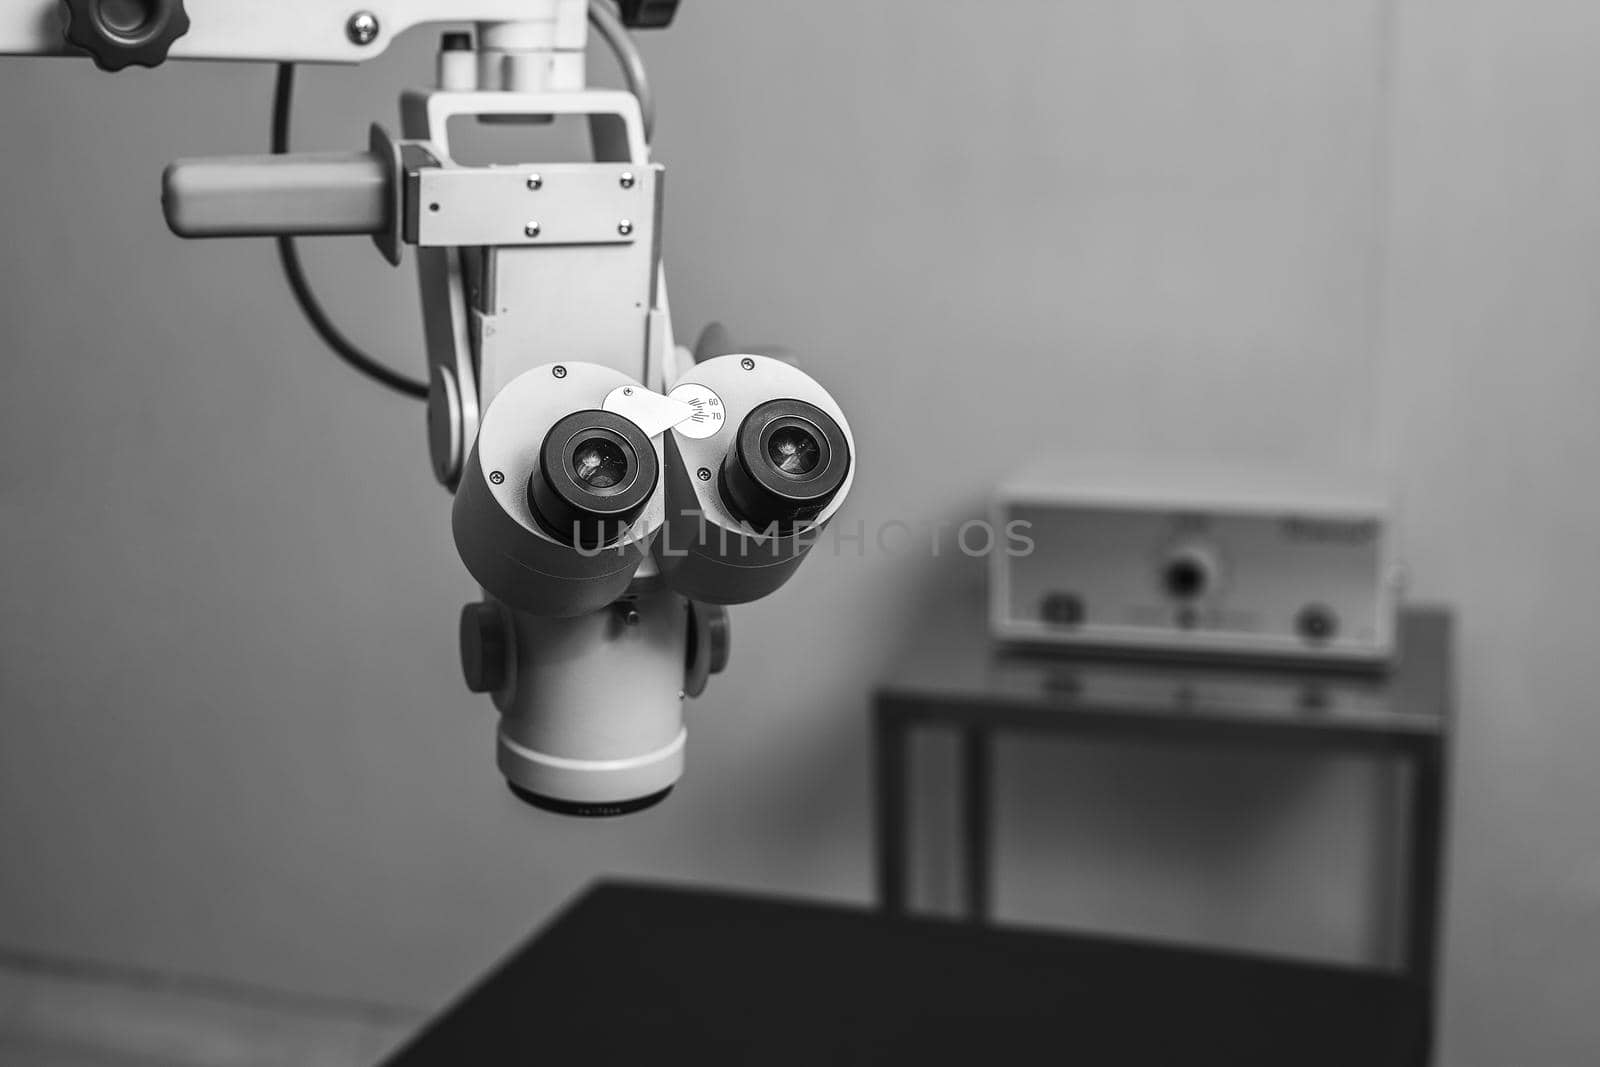 Medical optometrist equipment used for  eye exams